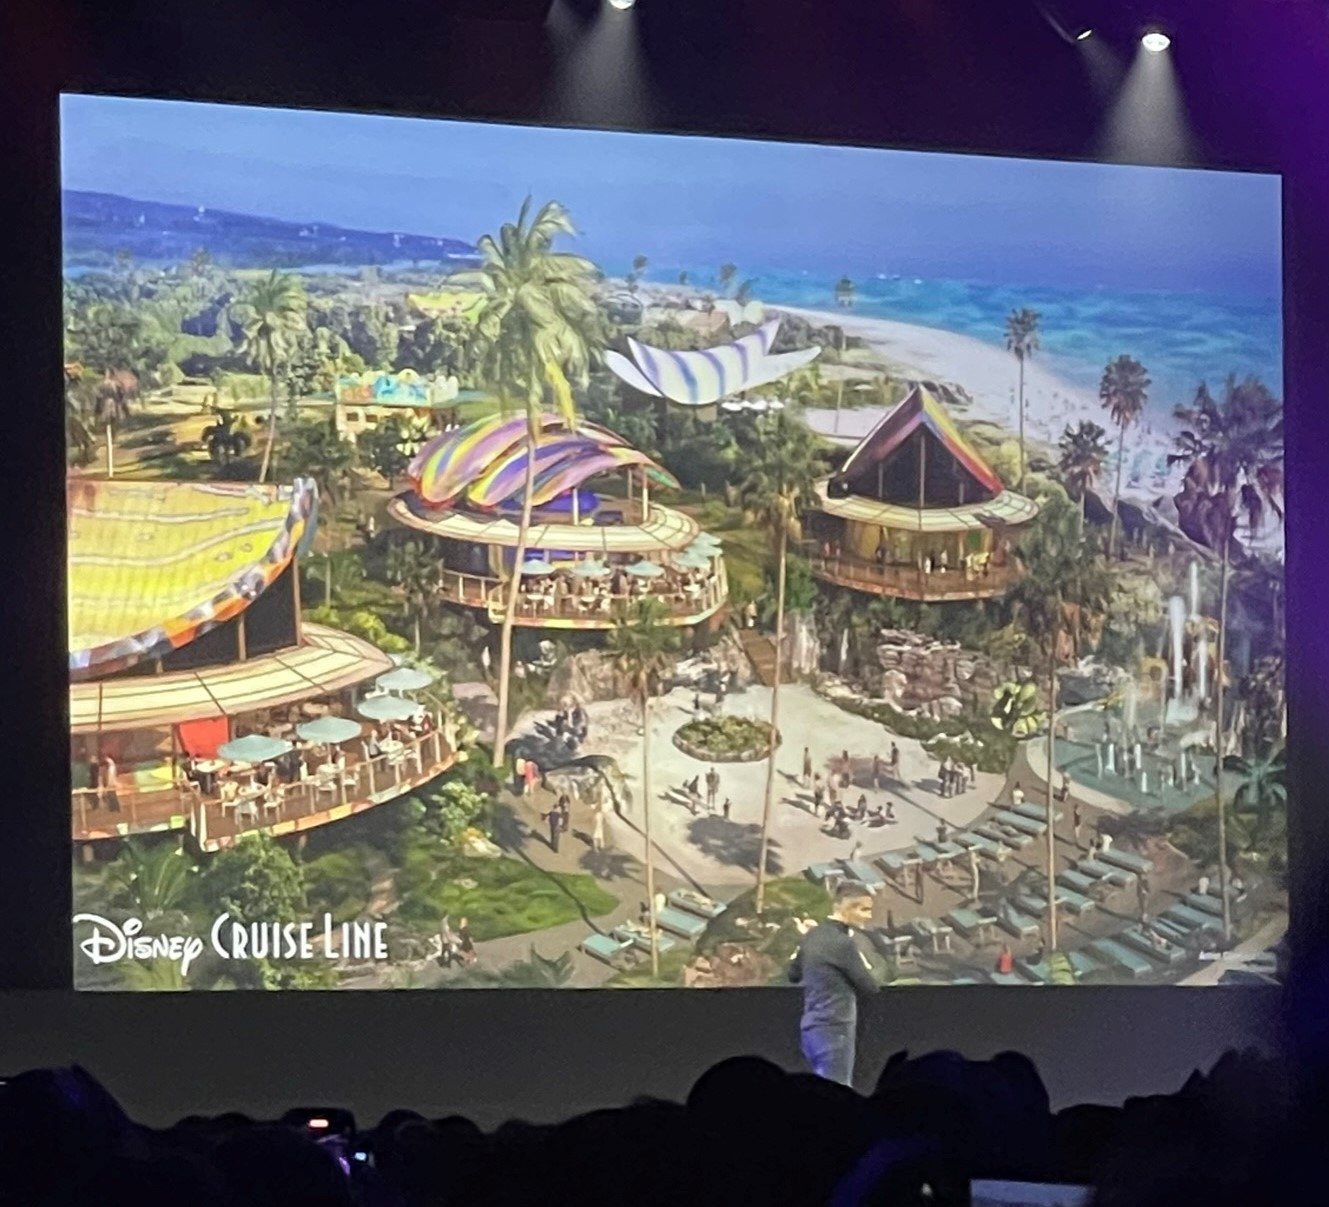 D23 Expo 2022 Parks and Resorts Panel | Full Panel | Disney Parks | Disneyland | Walt Disney World